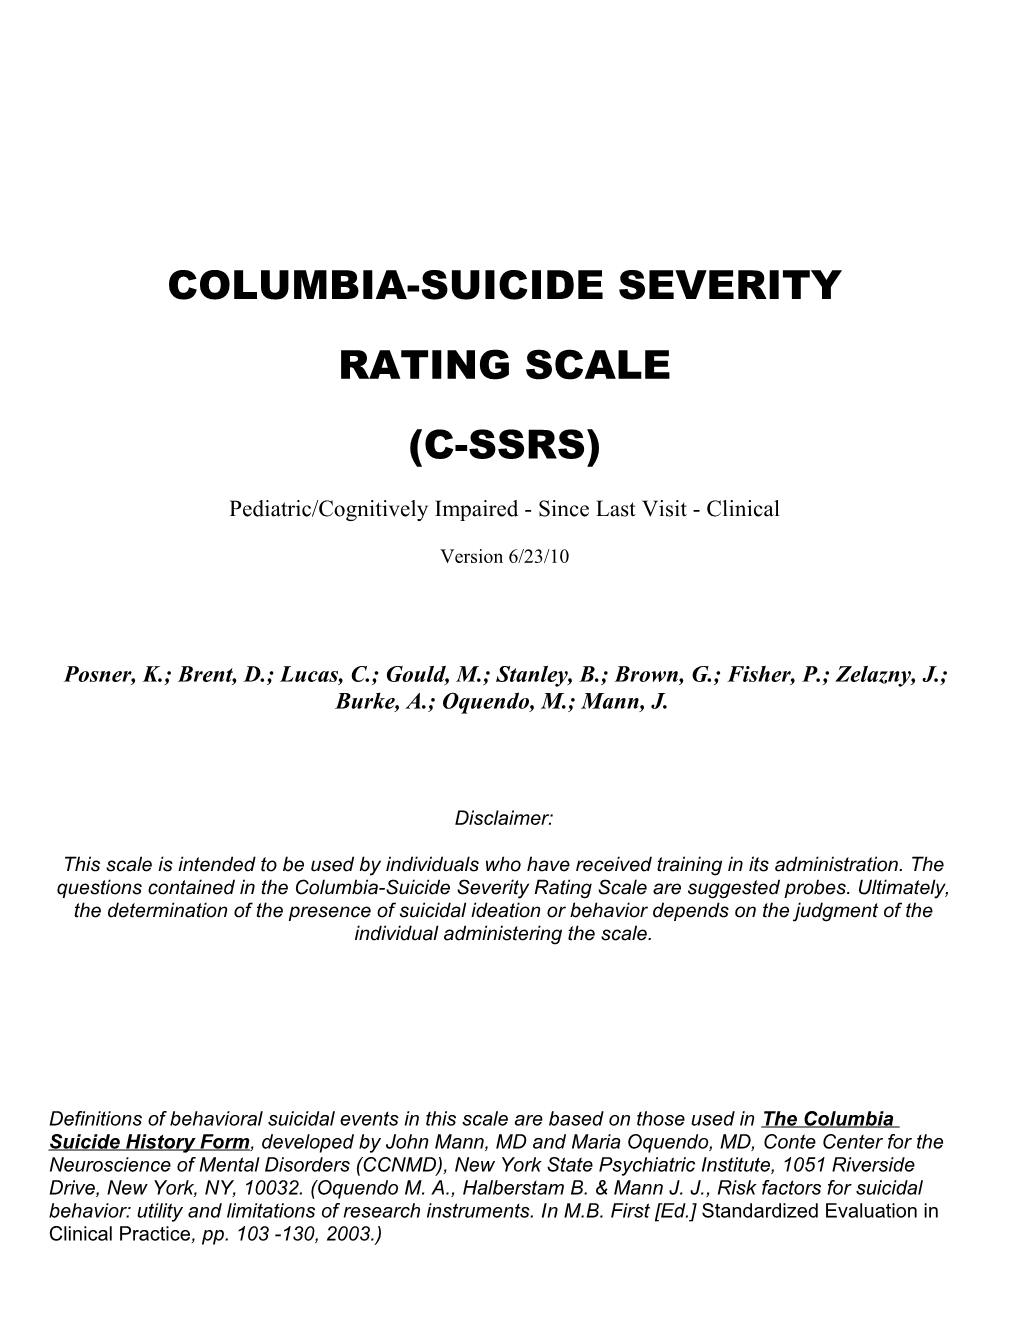 Columbia-Suicide Severity